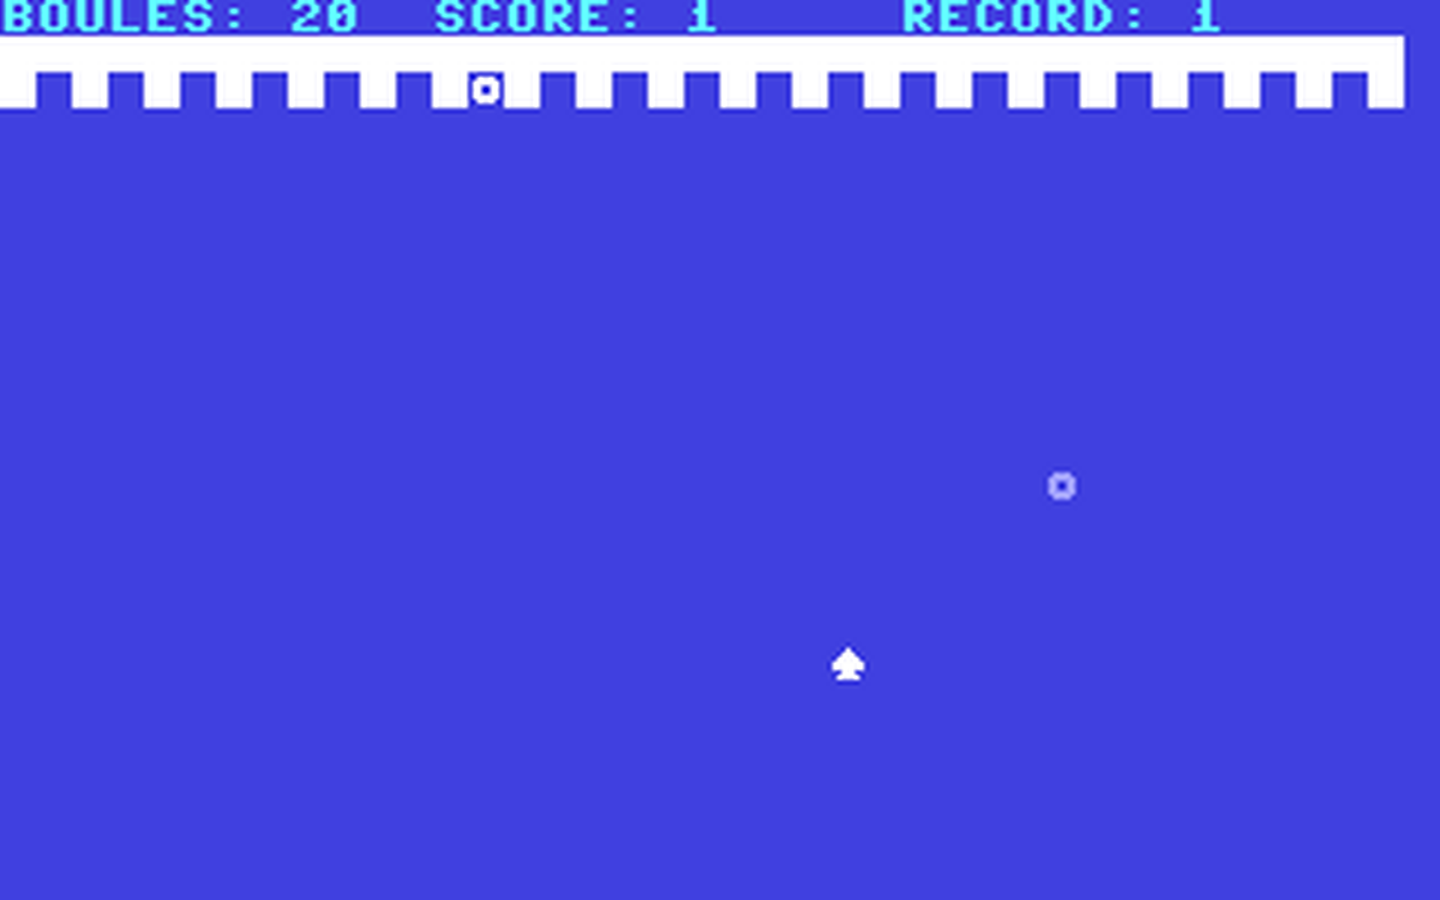 C64 GameBase Boules SYBEX_Inc. 1985